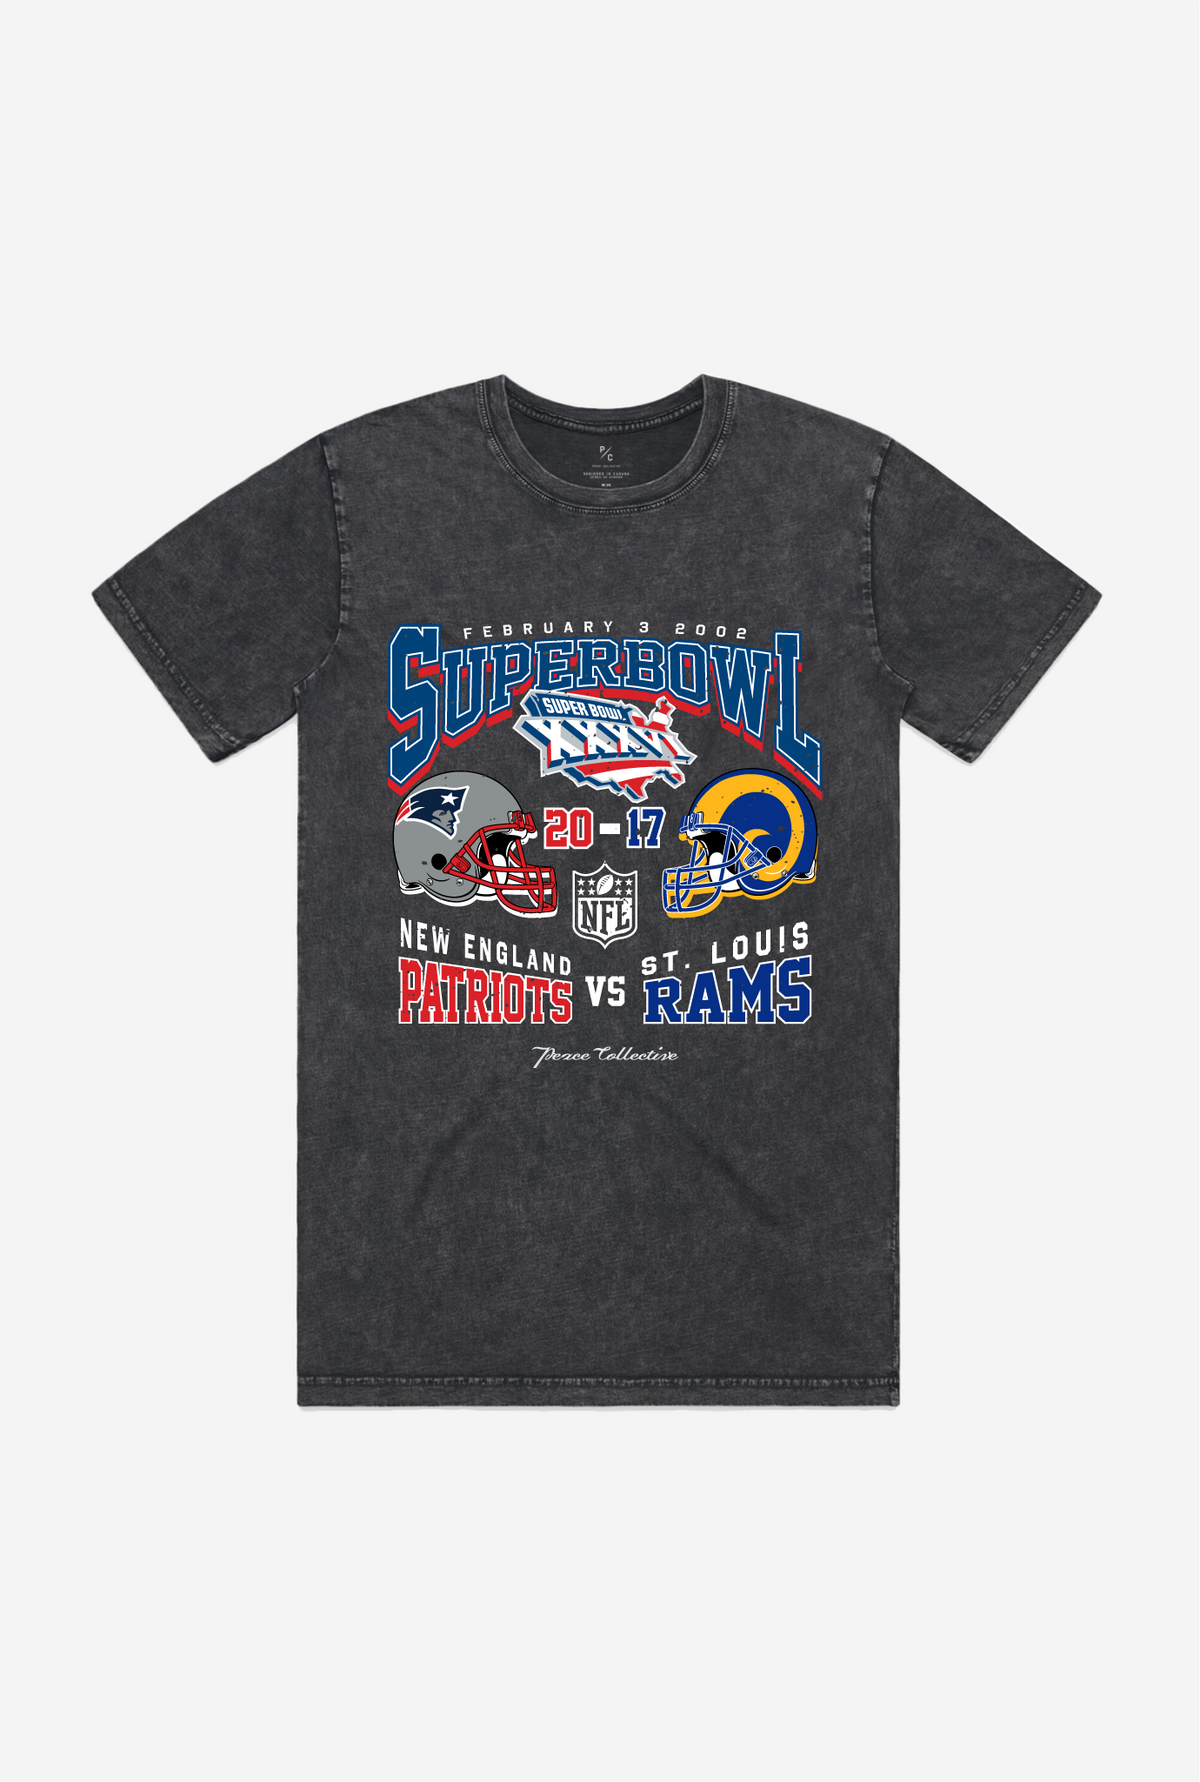 Super Bowl XXXVI: New England Patriots vs St. Louis Rams Stonewashed T-Shirt - Black